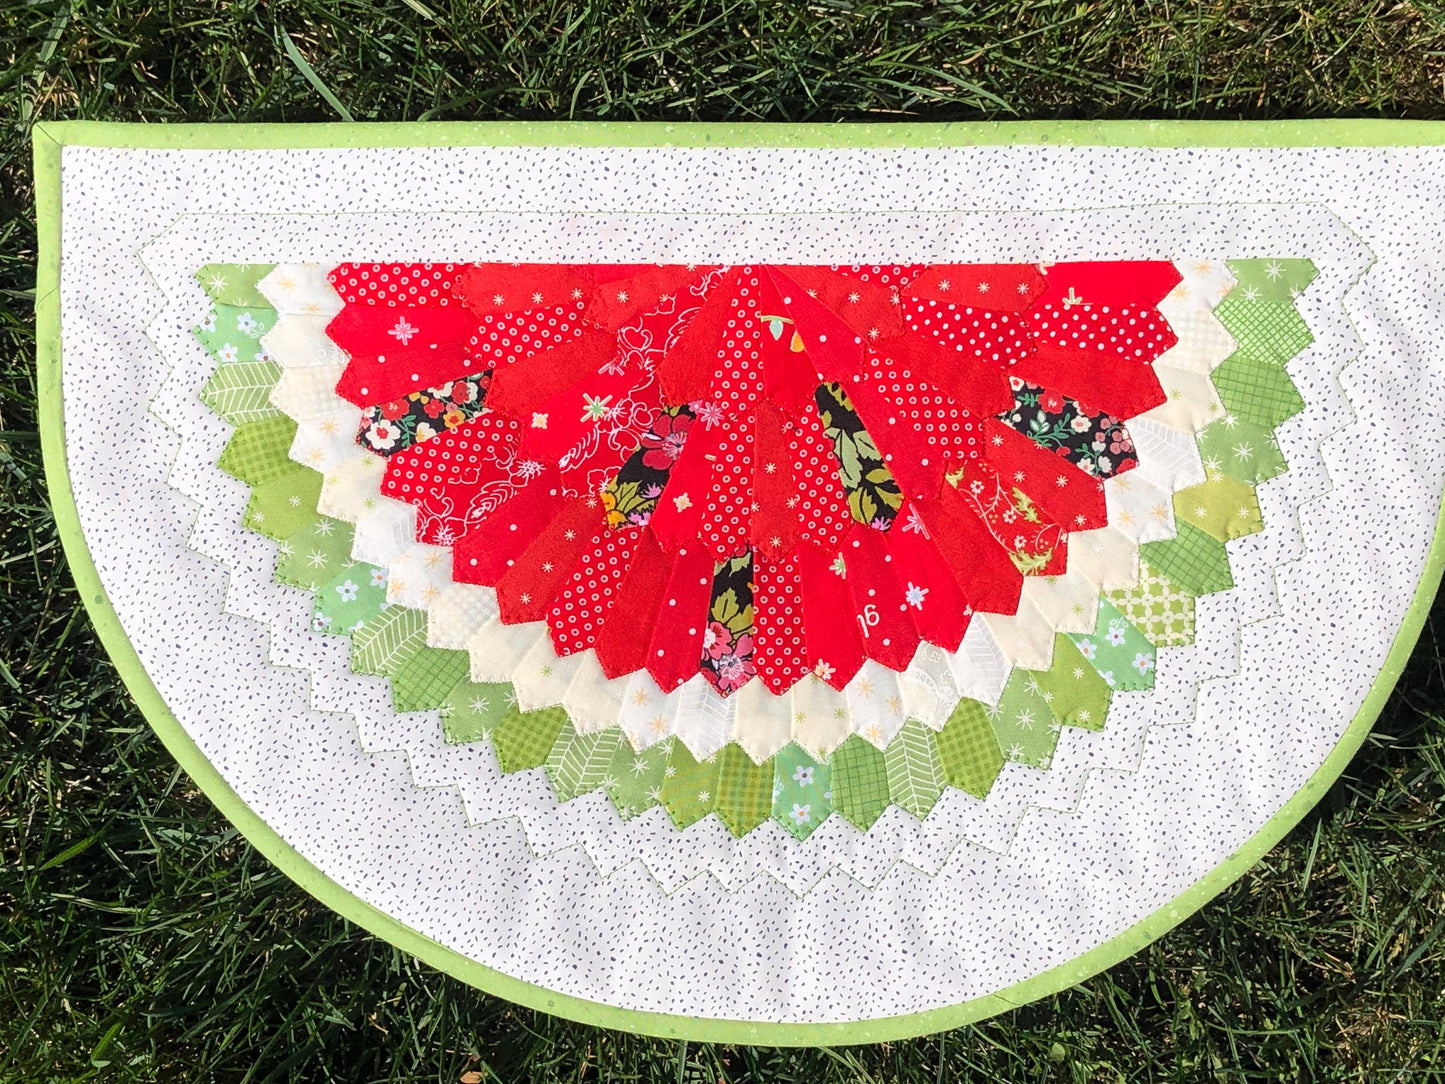 Watermelon Mini Dresden Kit with Pattern